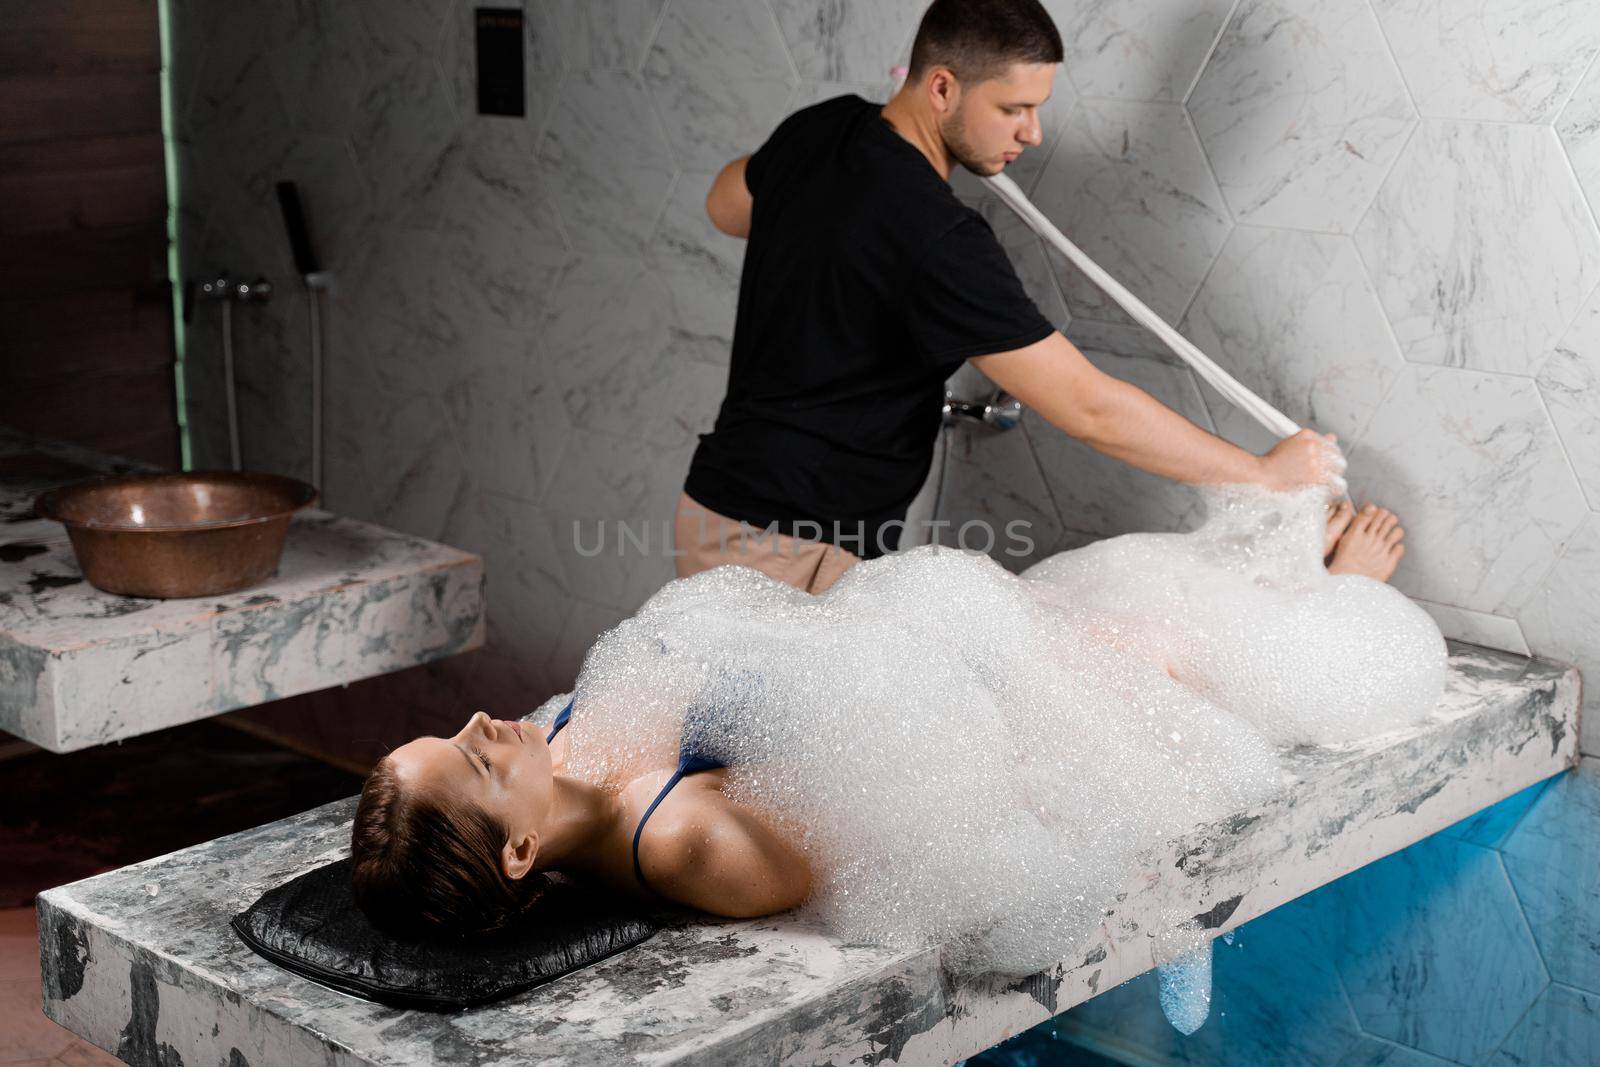 Turkish hammam spa procedure. Foam peeling massage for body